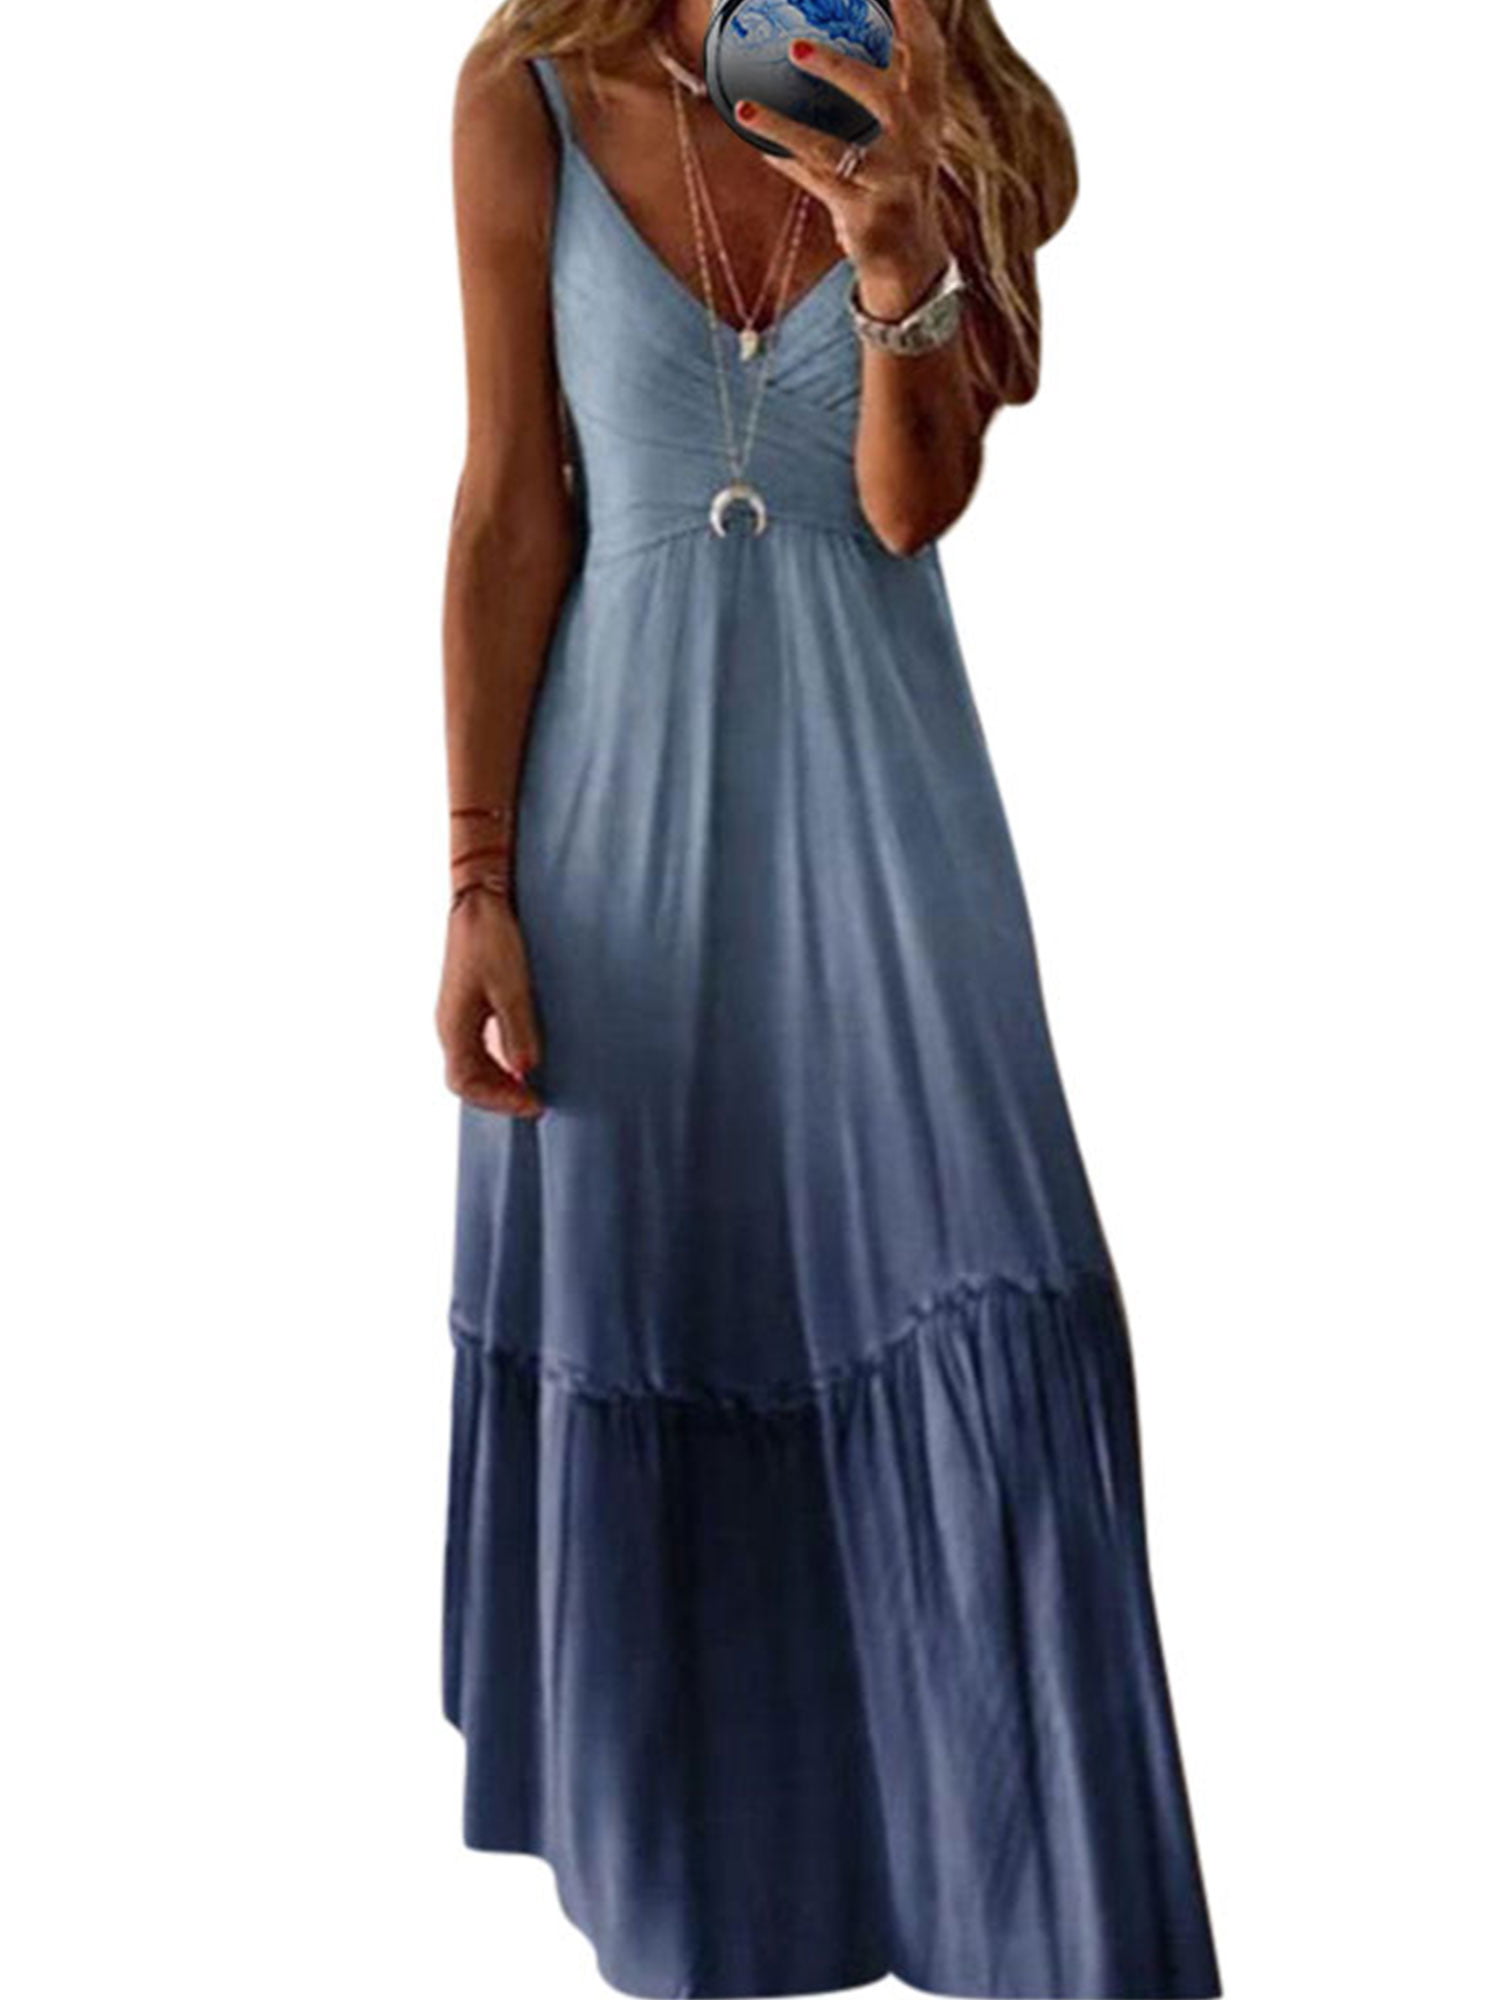 Gradient Color Sleeveless Swing Beach Sundress Slim Fit Long Dresses Women Spaghetti Strap Maxi Dress 